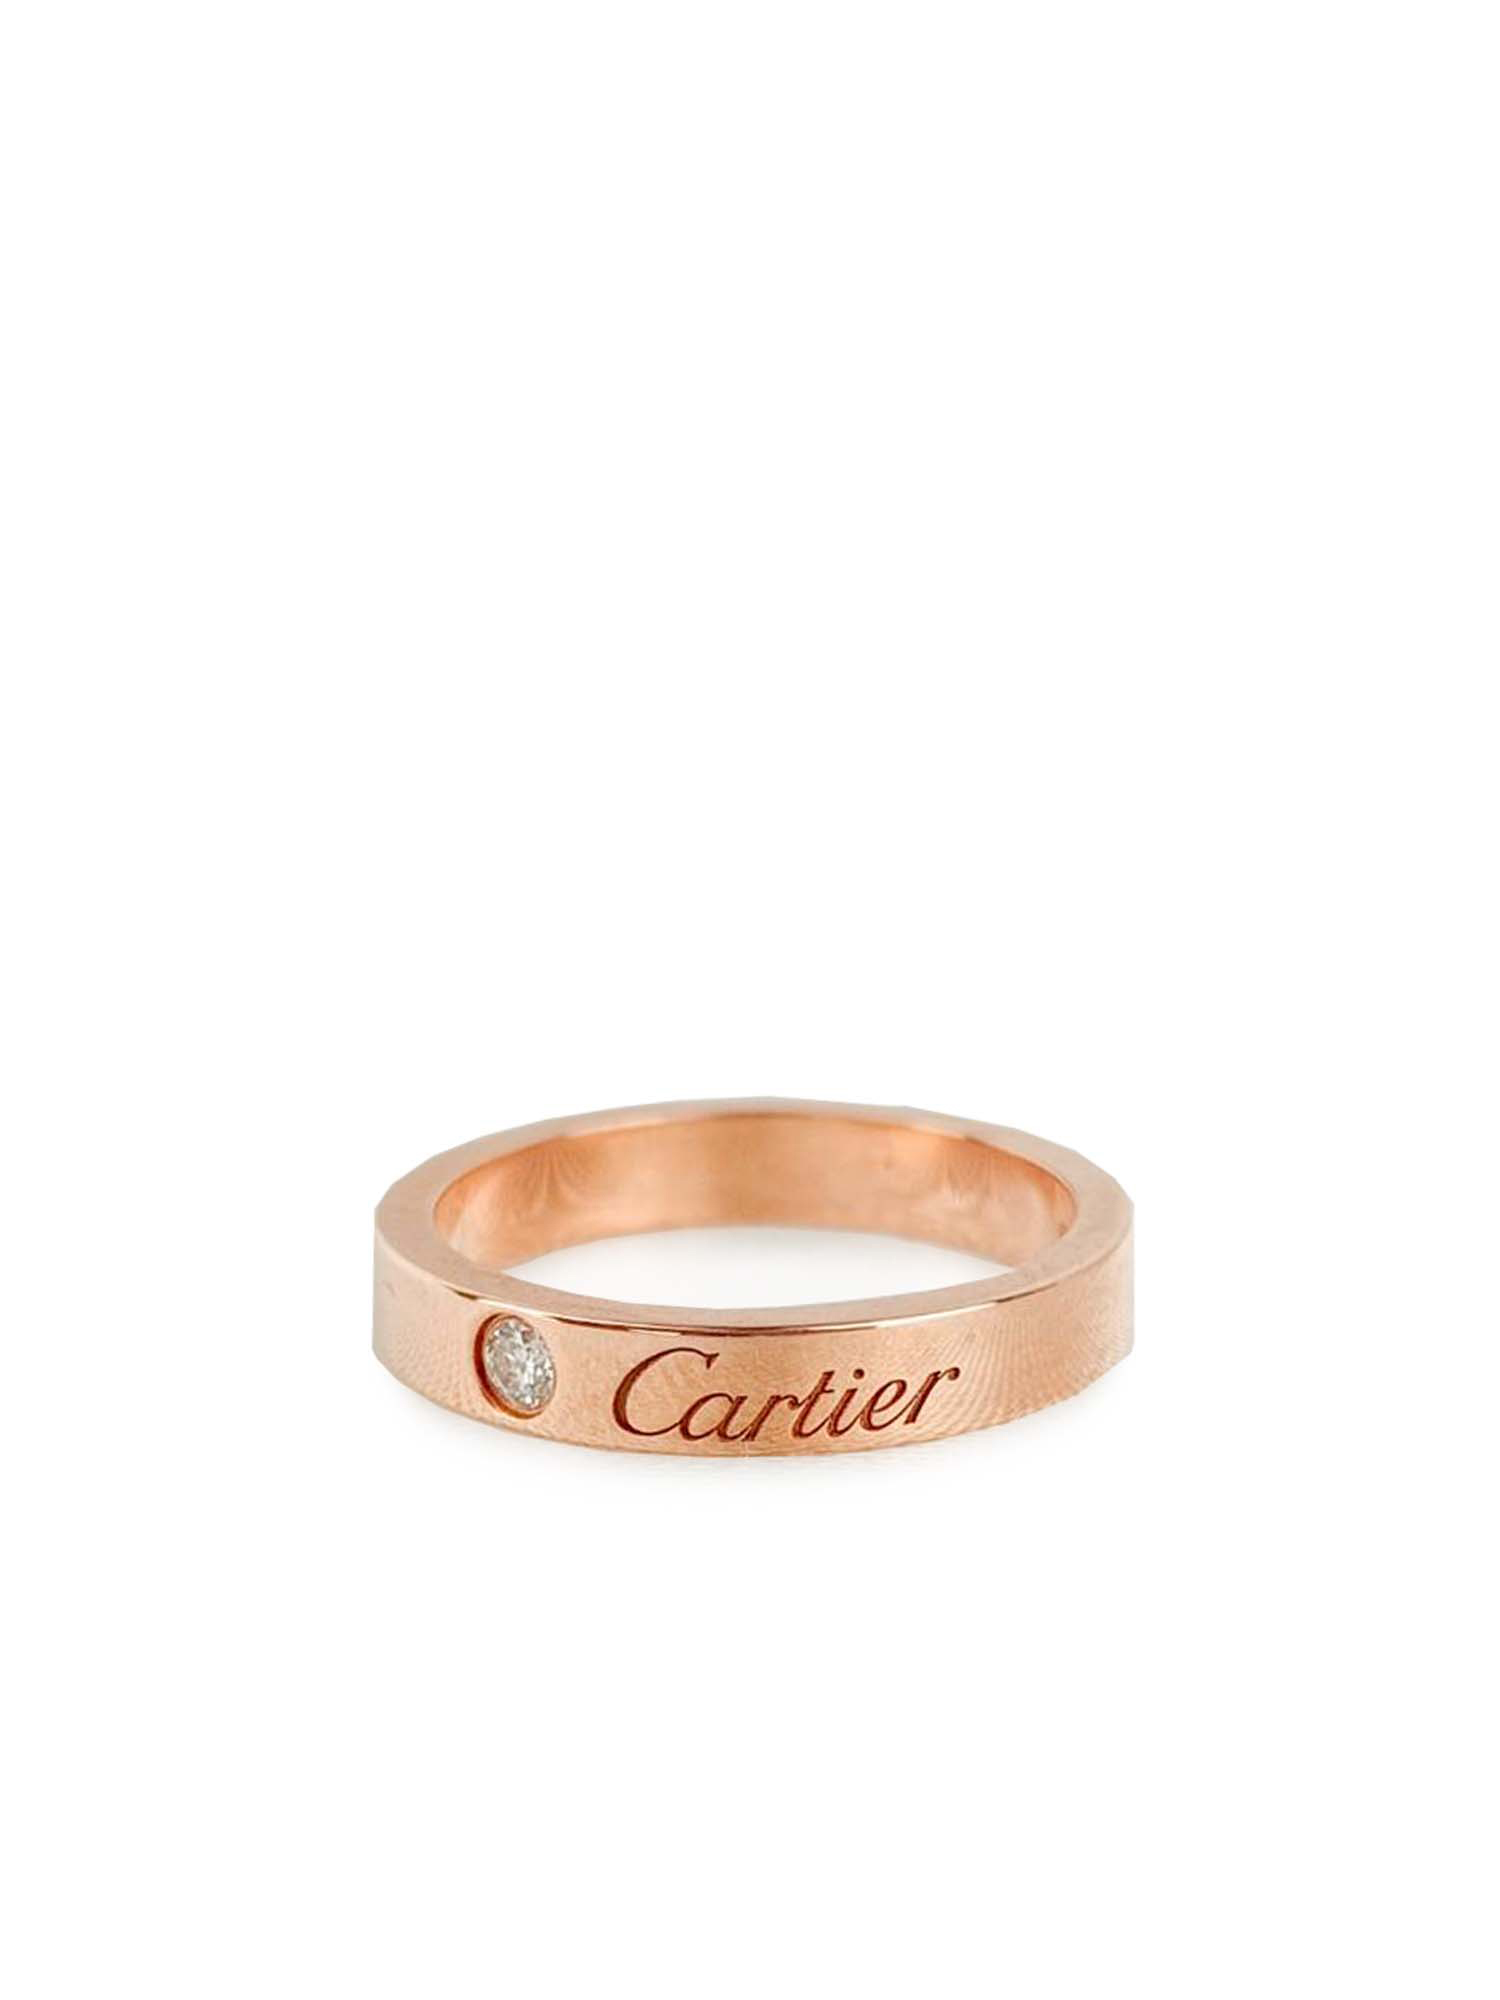 Cartier C De Wedding Band in Rose Gold Diamond Size 47